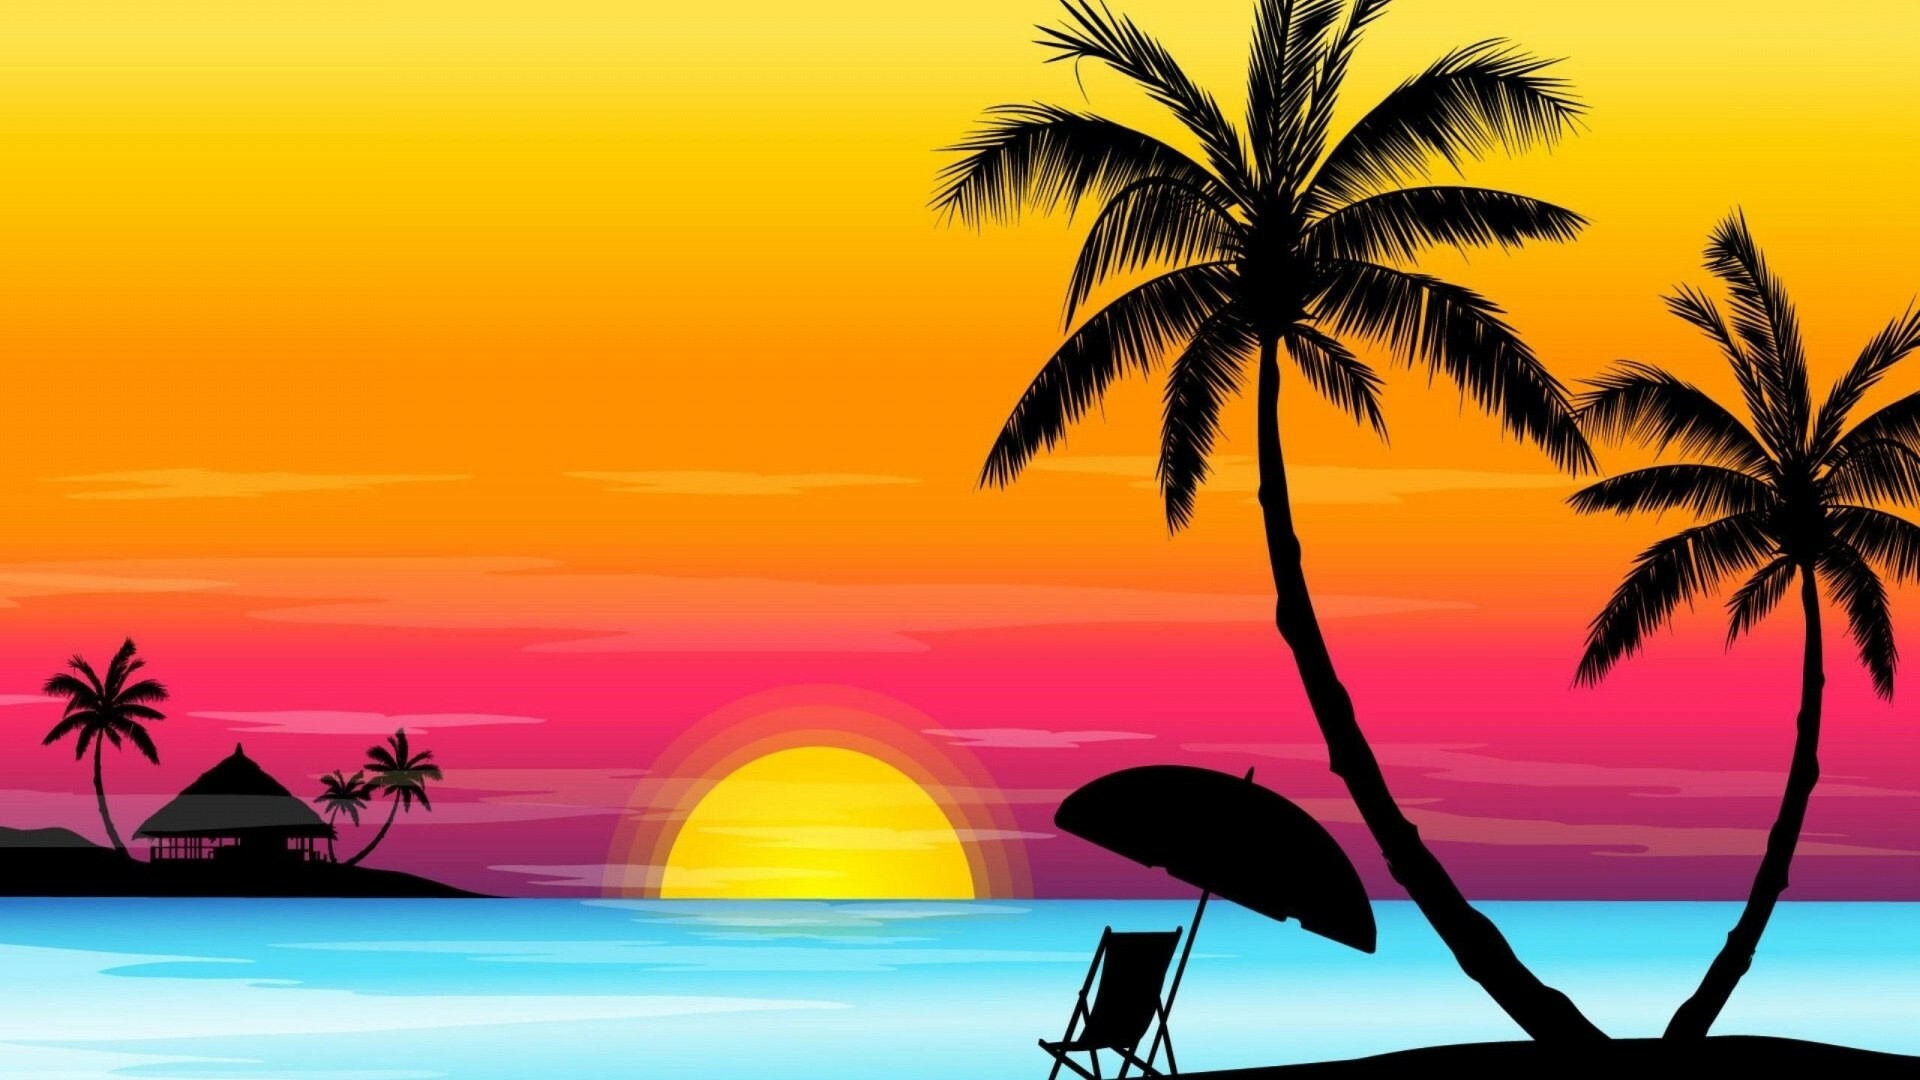 Palm Tree: A symbol of the tropical island paradise, Minimalism. 1920x1080 Full HD Background.